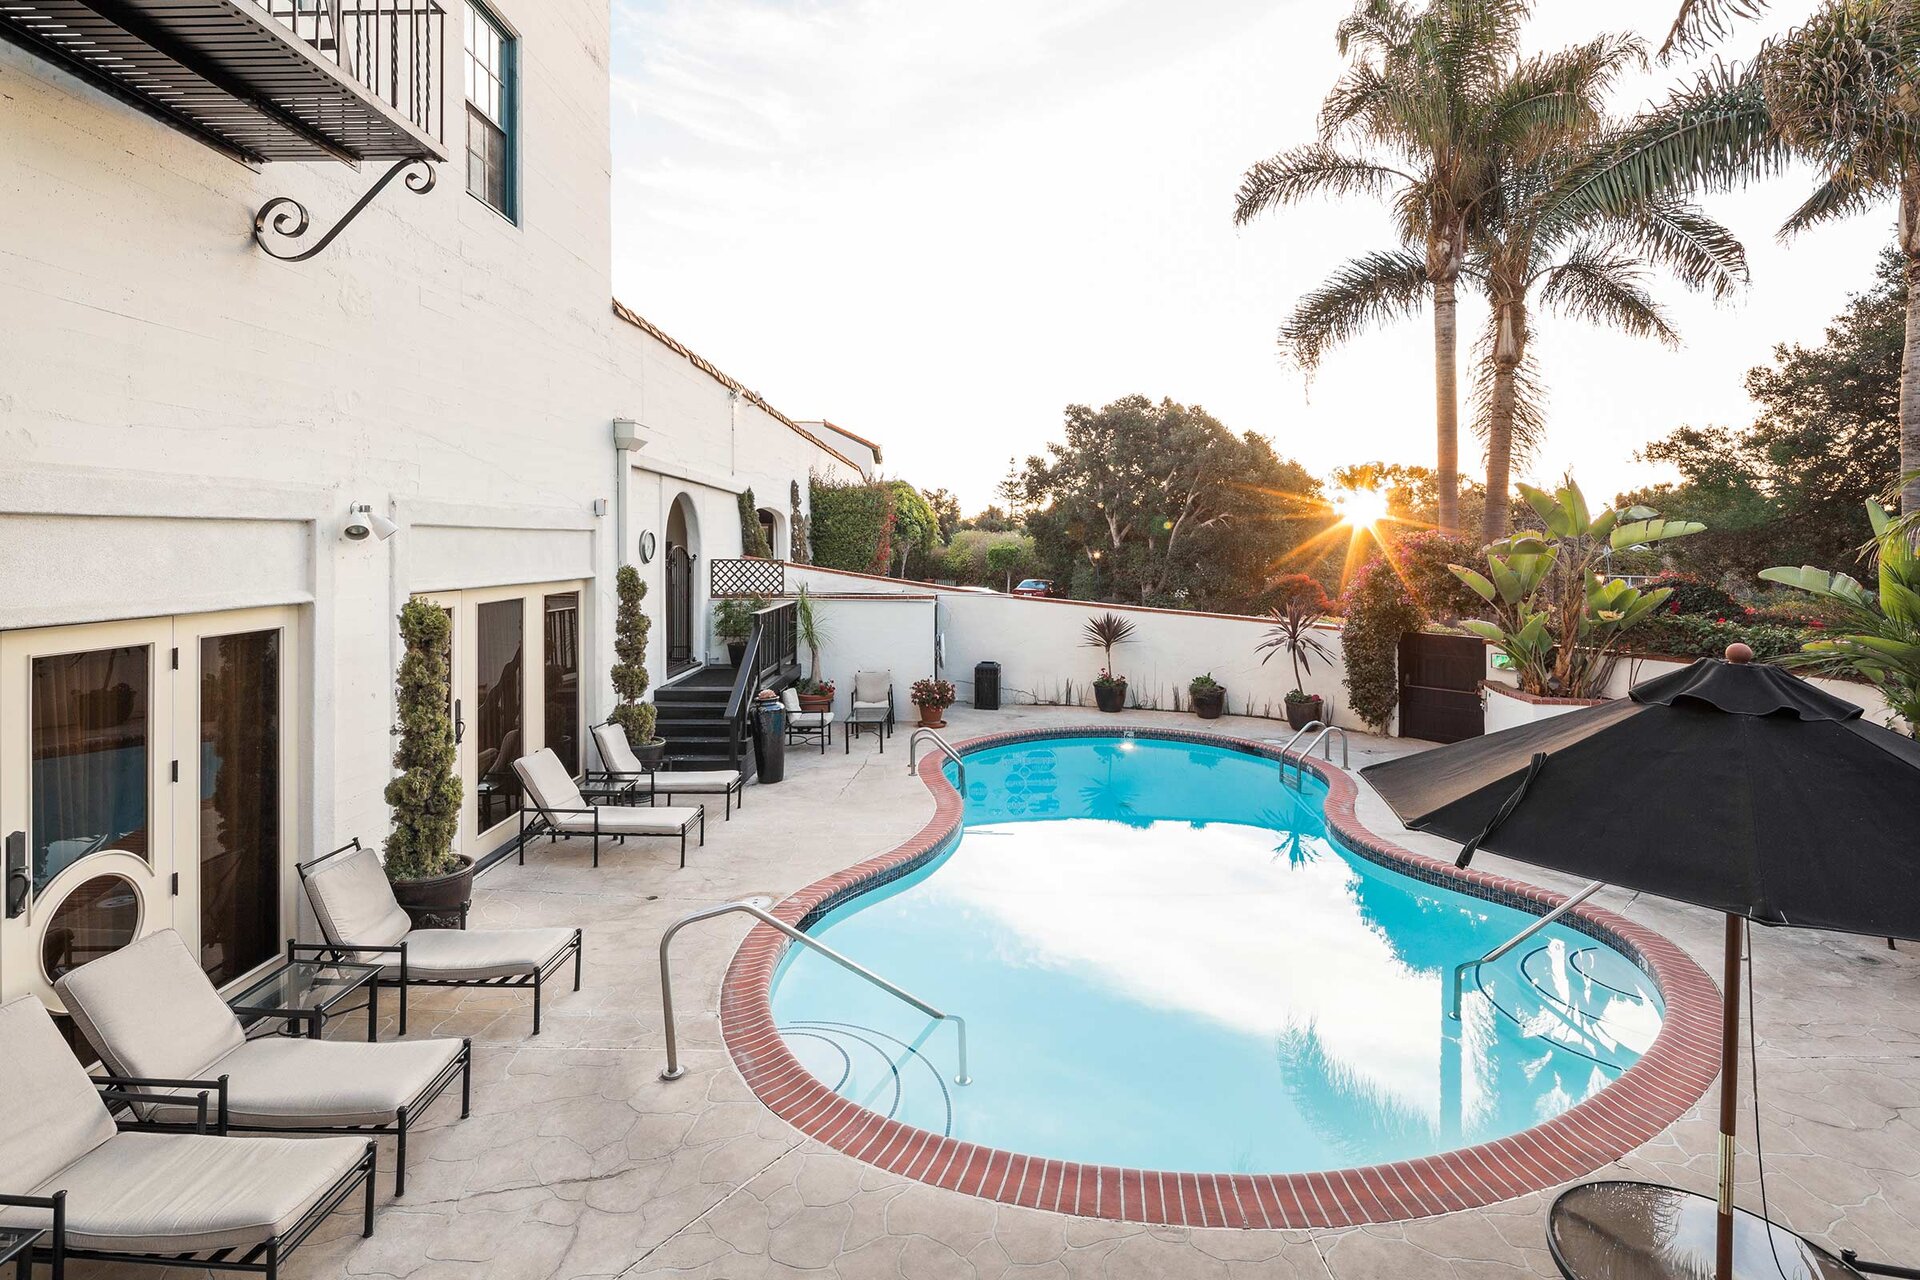 Pool at Montecito Inn